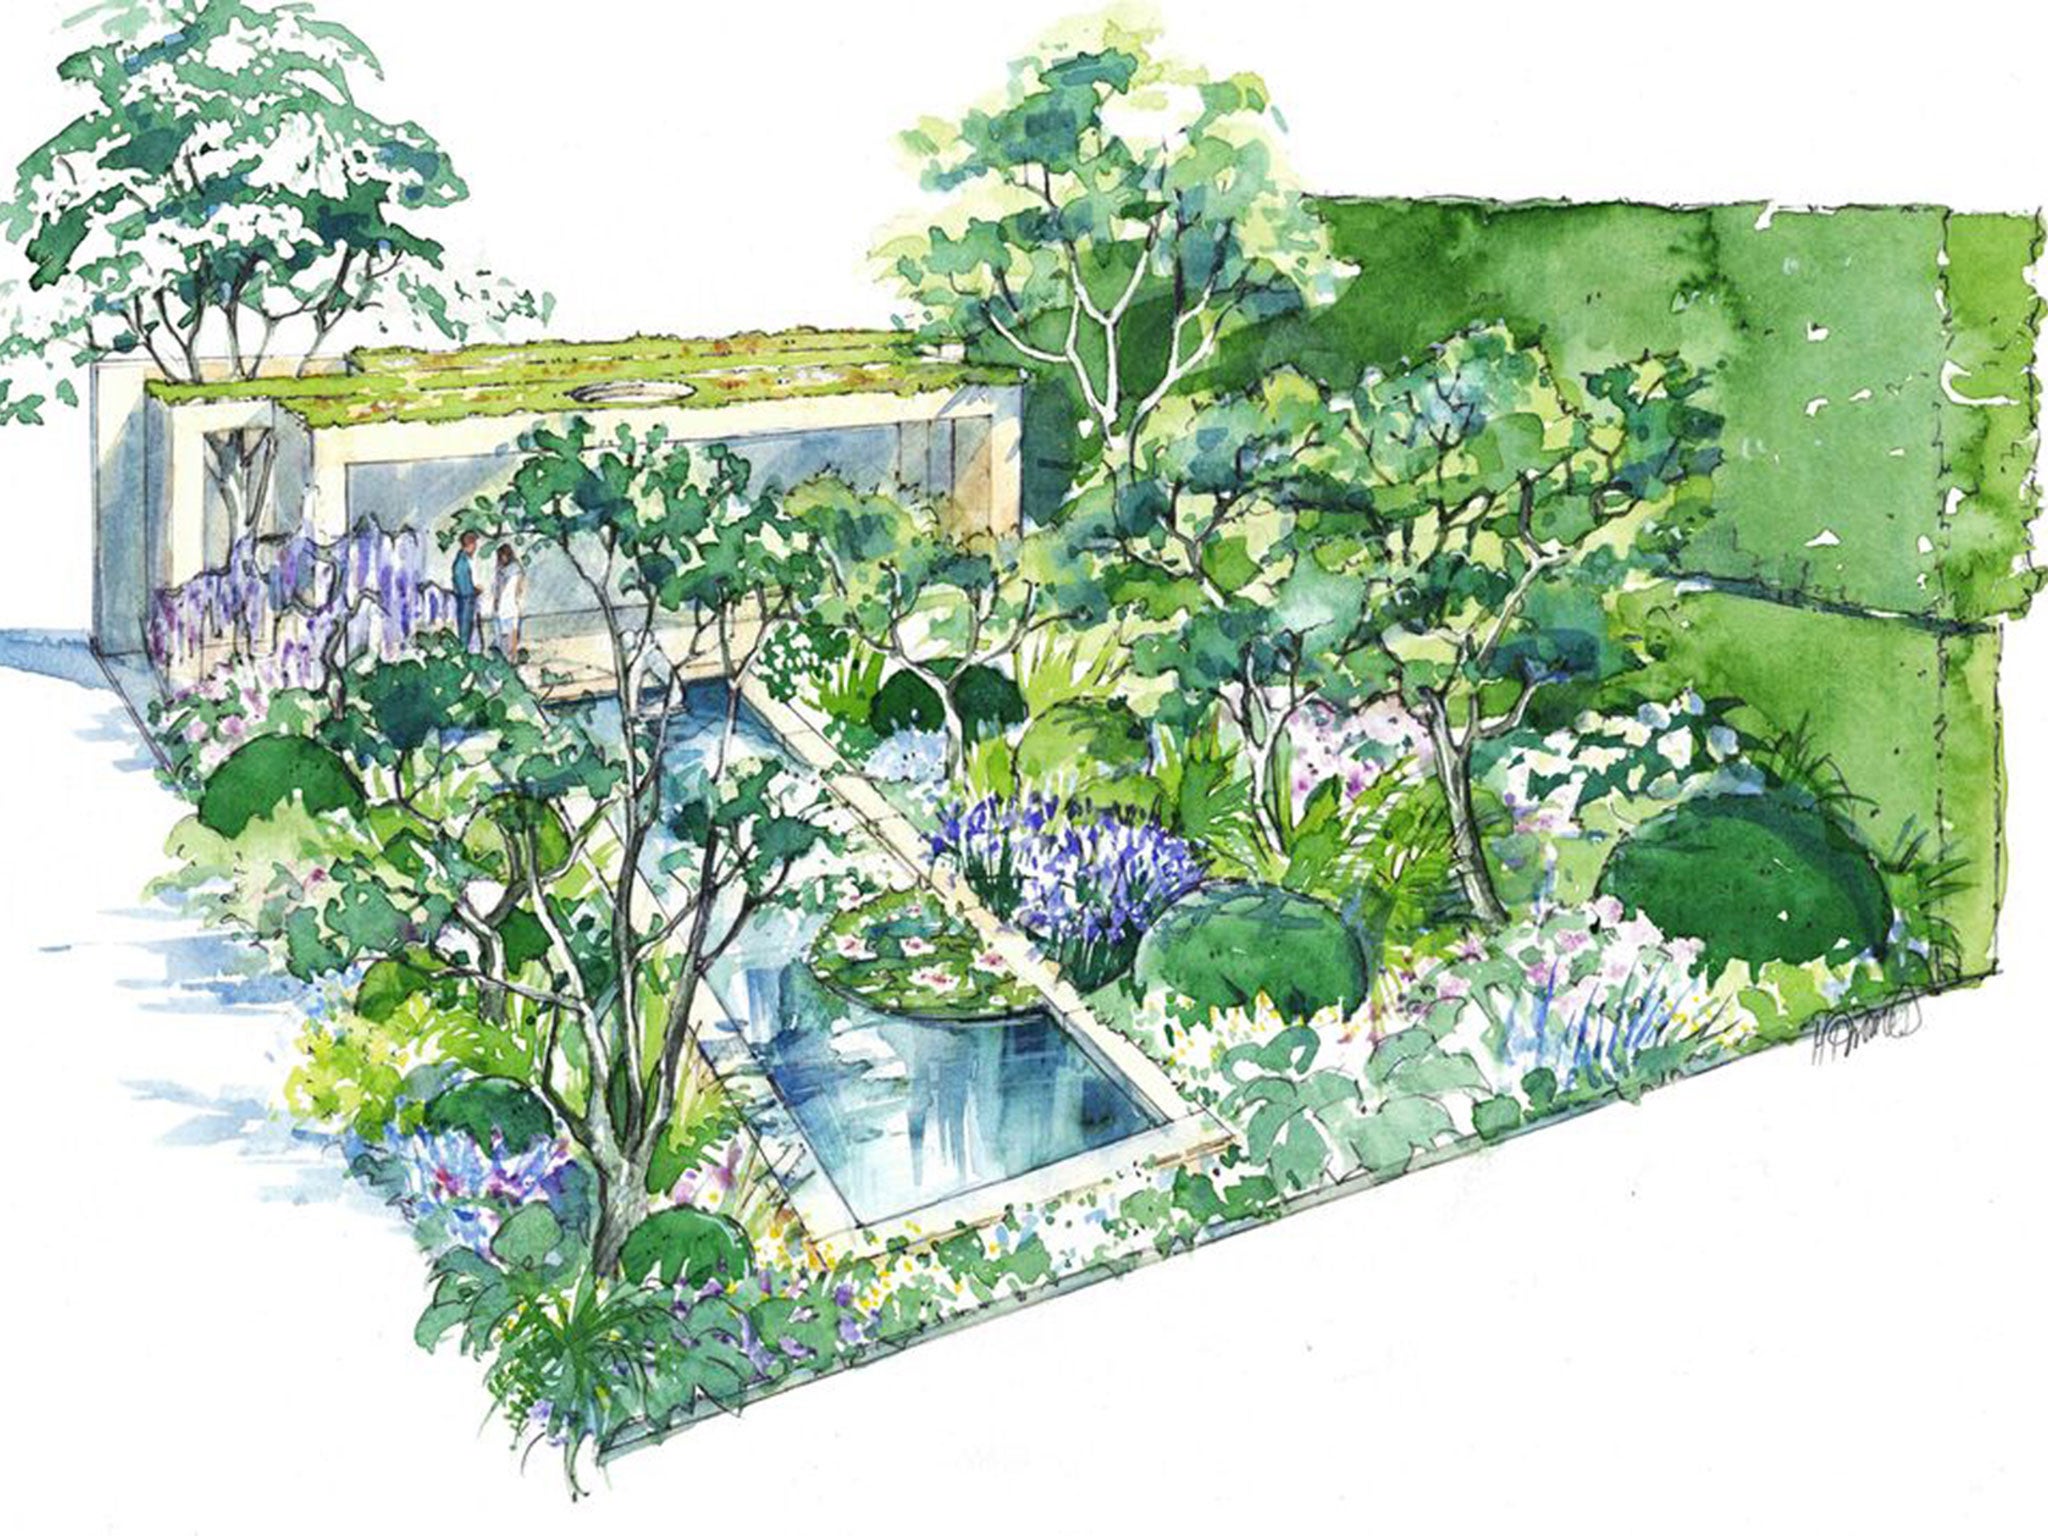 Chris Beardshaw designed the Morgan Stanley Garden for Great Ormond Street Hospital